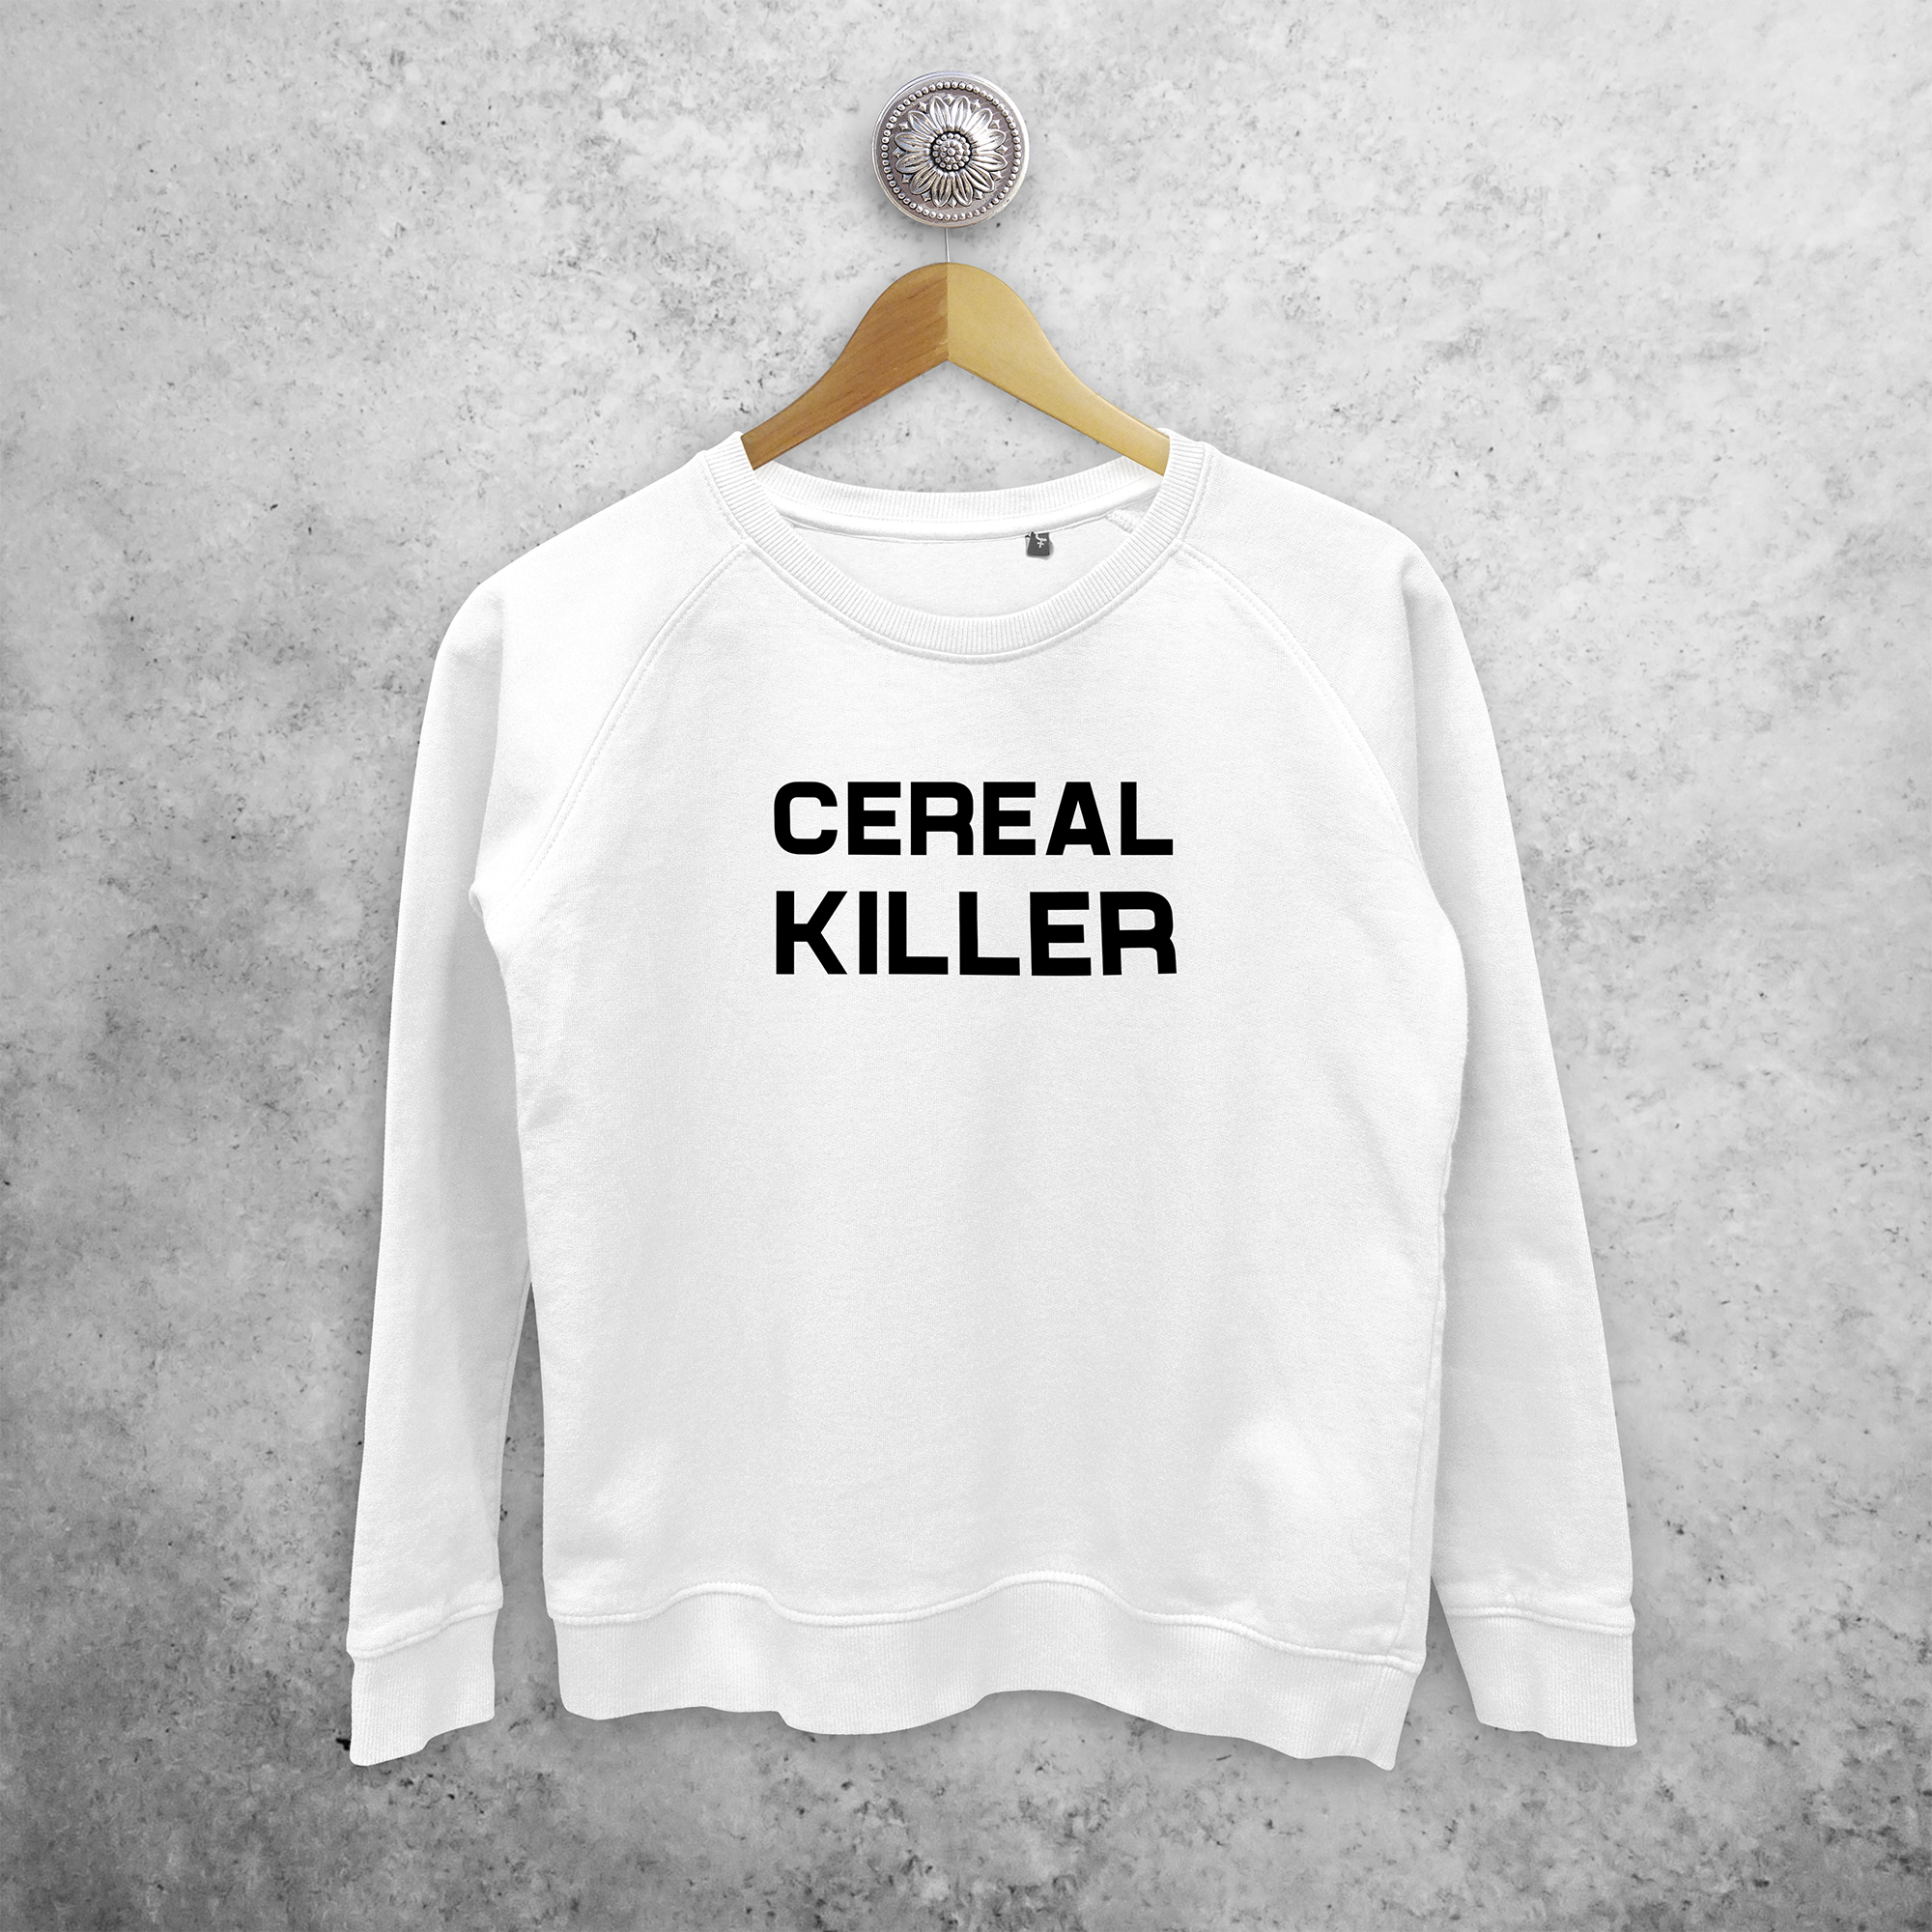 'Cereal killer' sweater